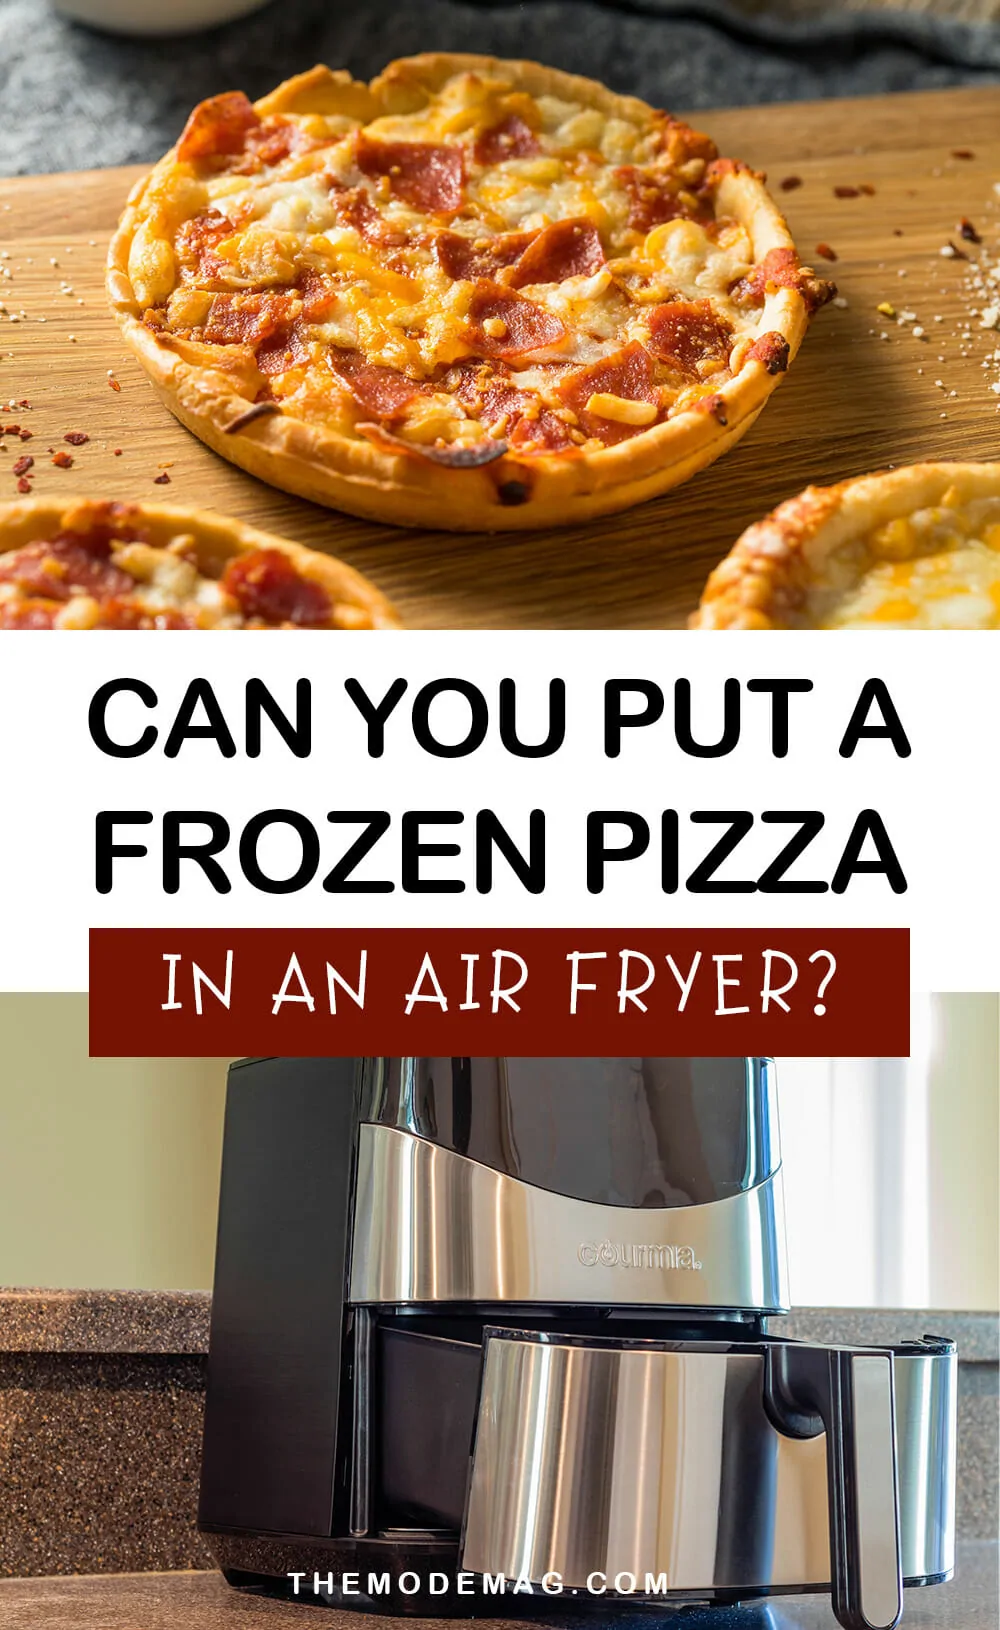 Can You Put A Frozen Pizza In An Air Fryer?